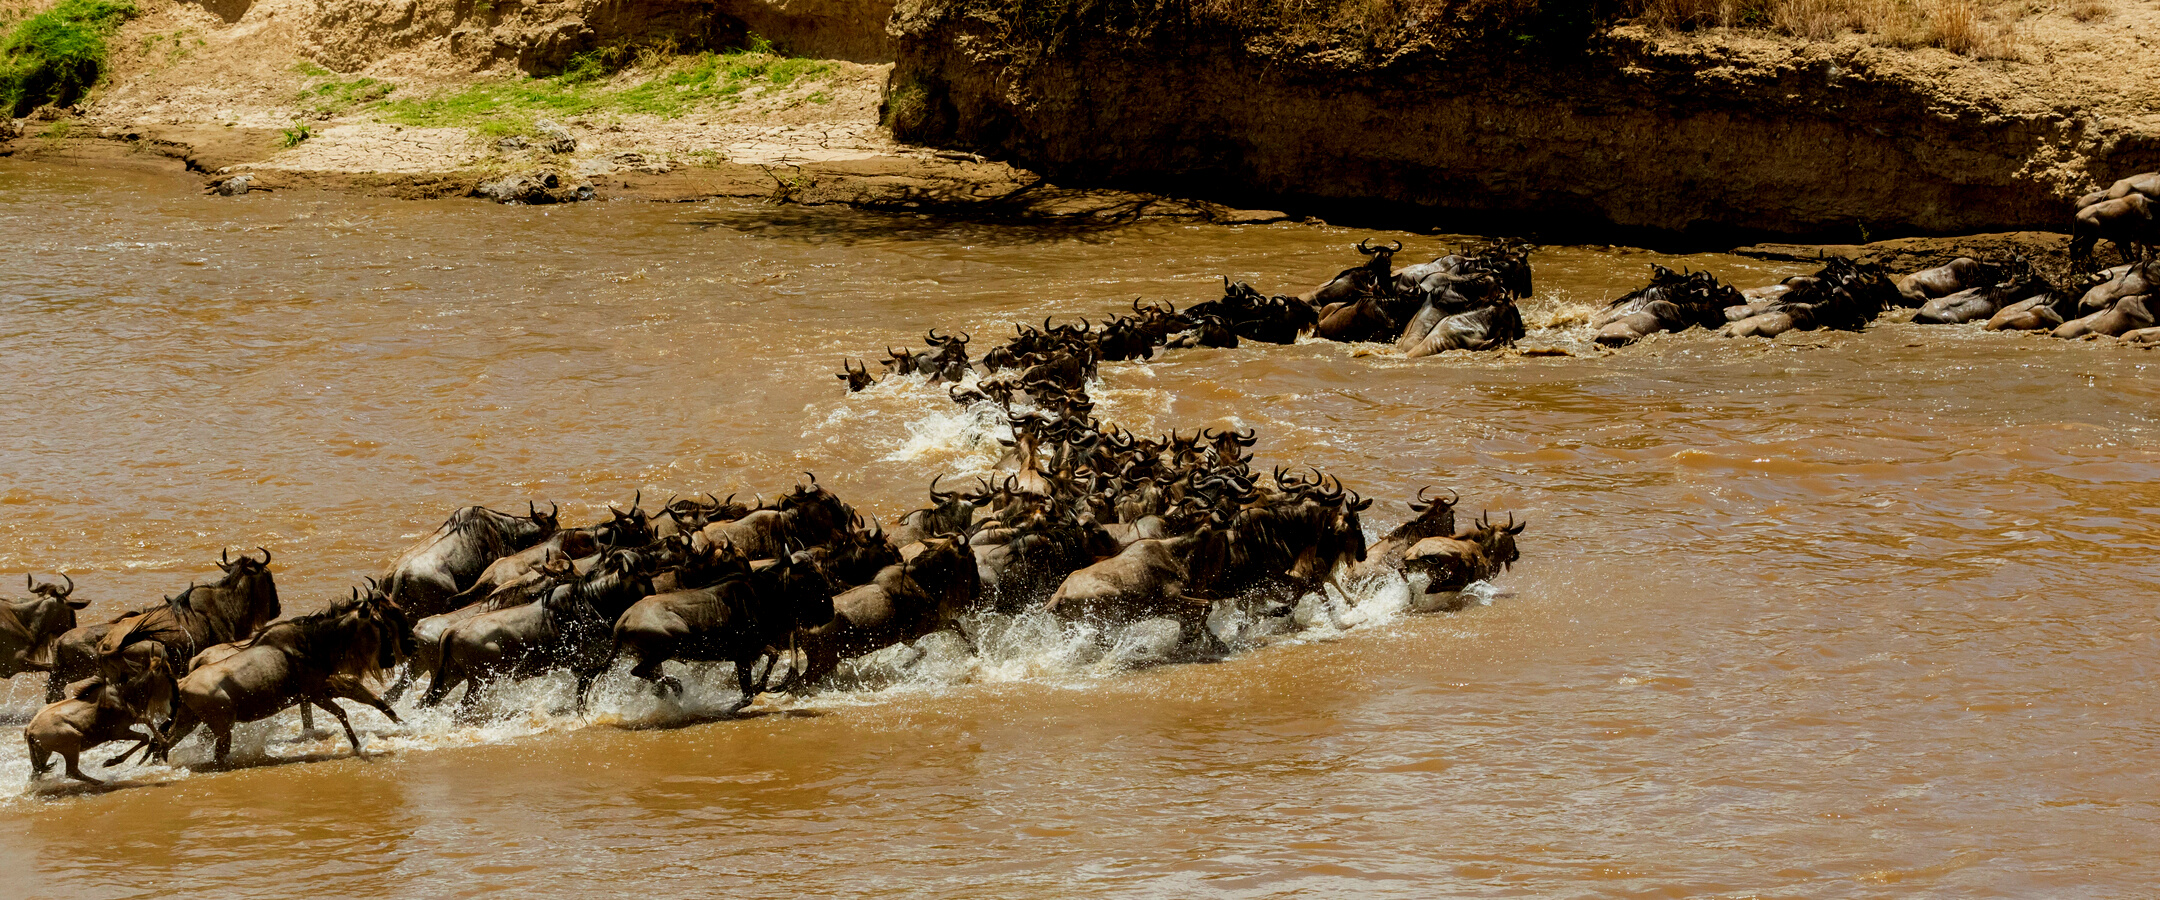 wild beast migration in Serengeti